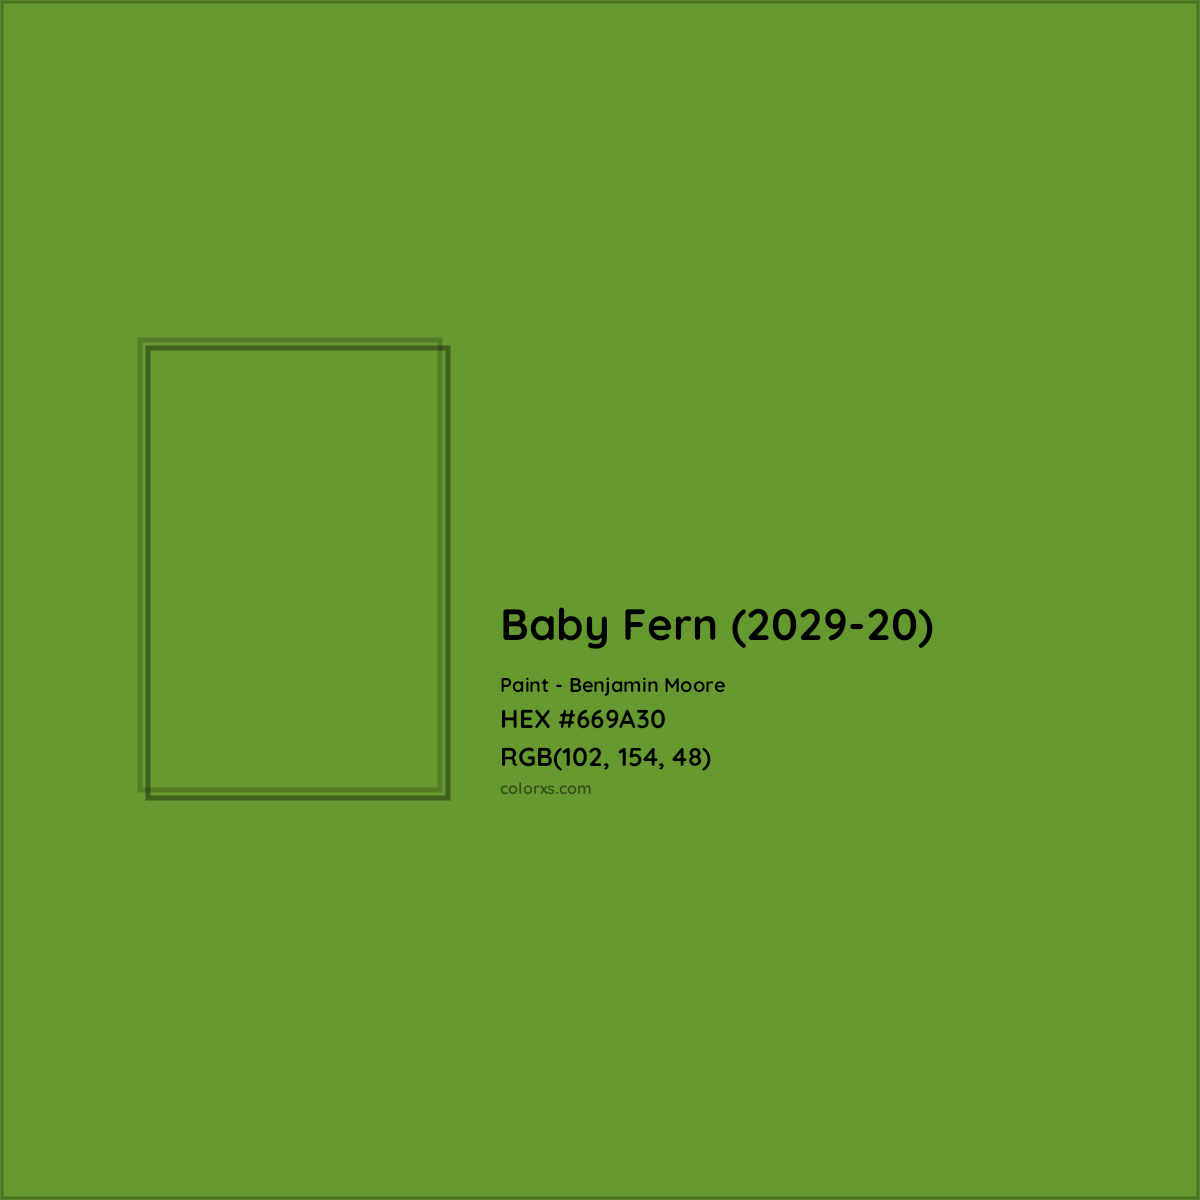 HEX #669A30 Baby Fern (2029-20) Paint Benjamin Moore - Color Code